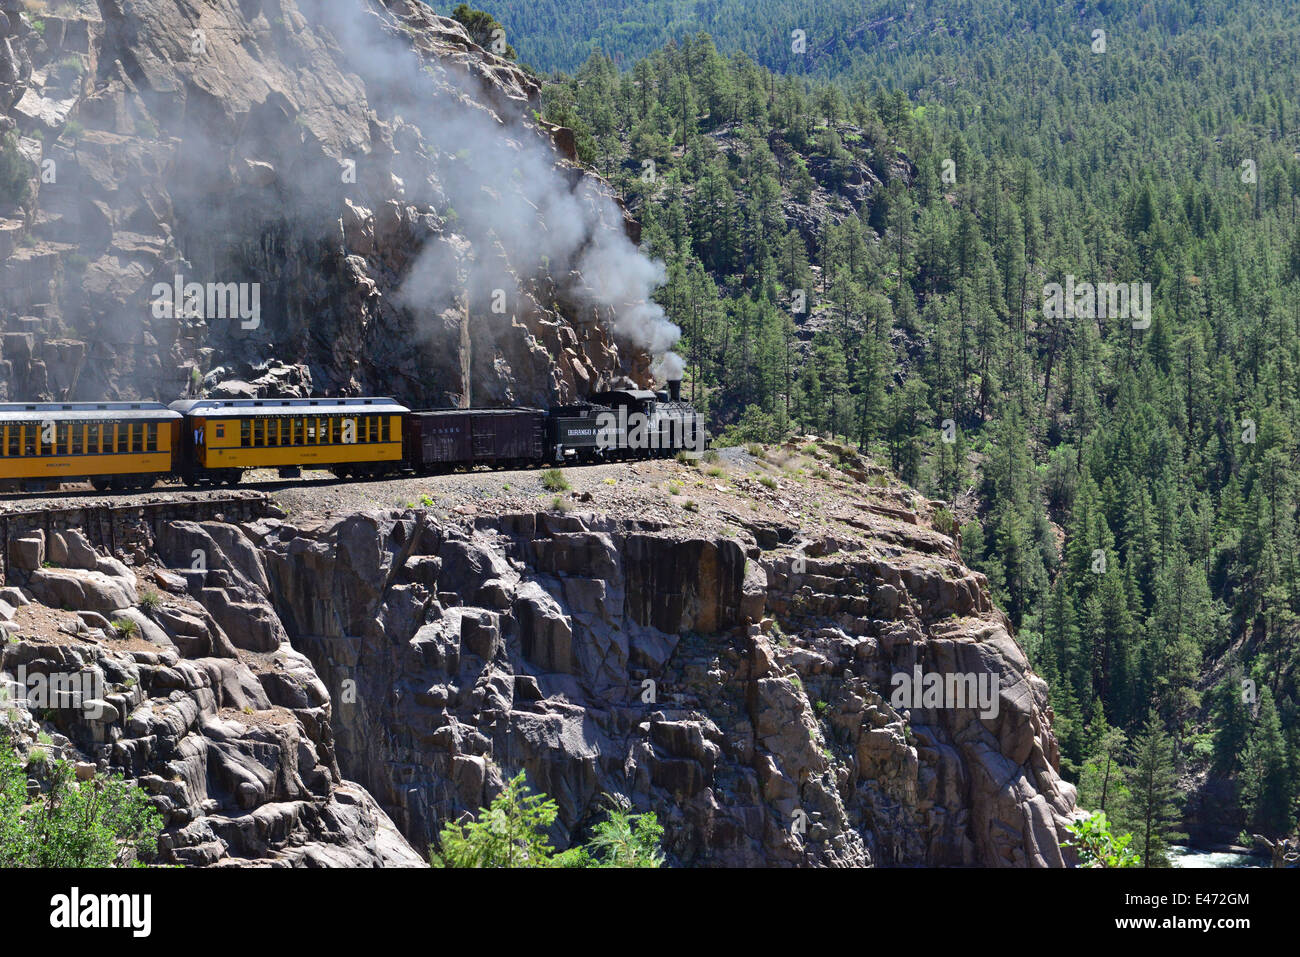 A narrow gauge locomotive of the Durango & Silverton Railway at Animas Canyon. Stock Photo